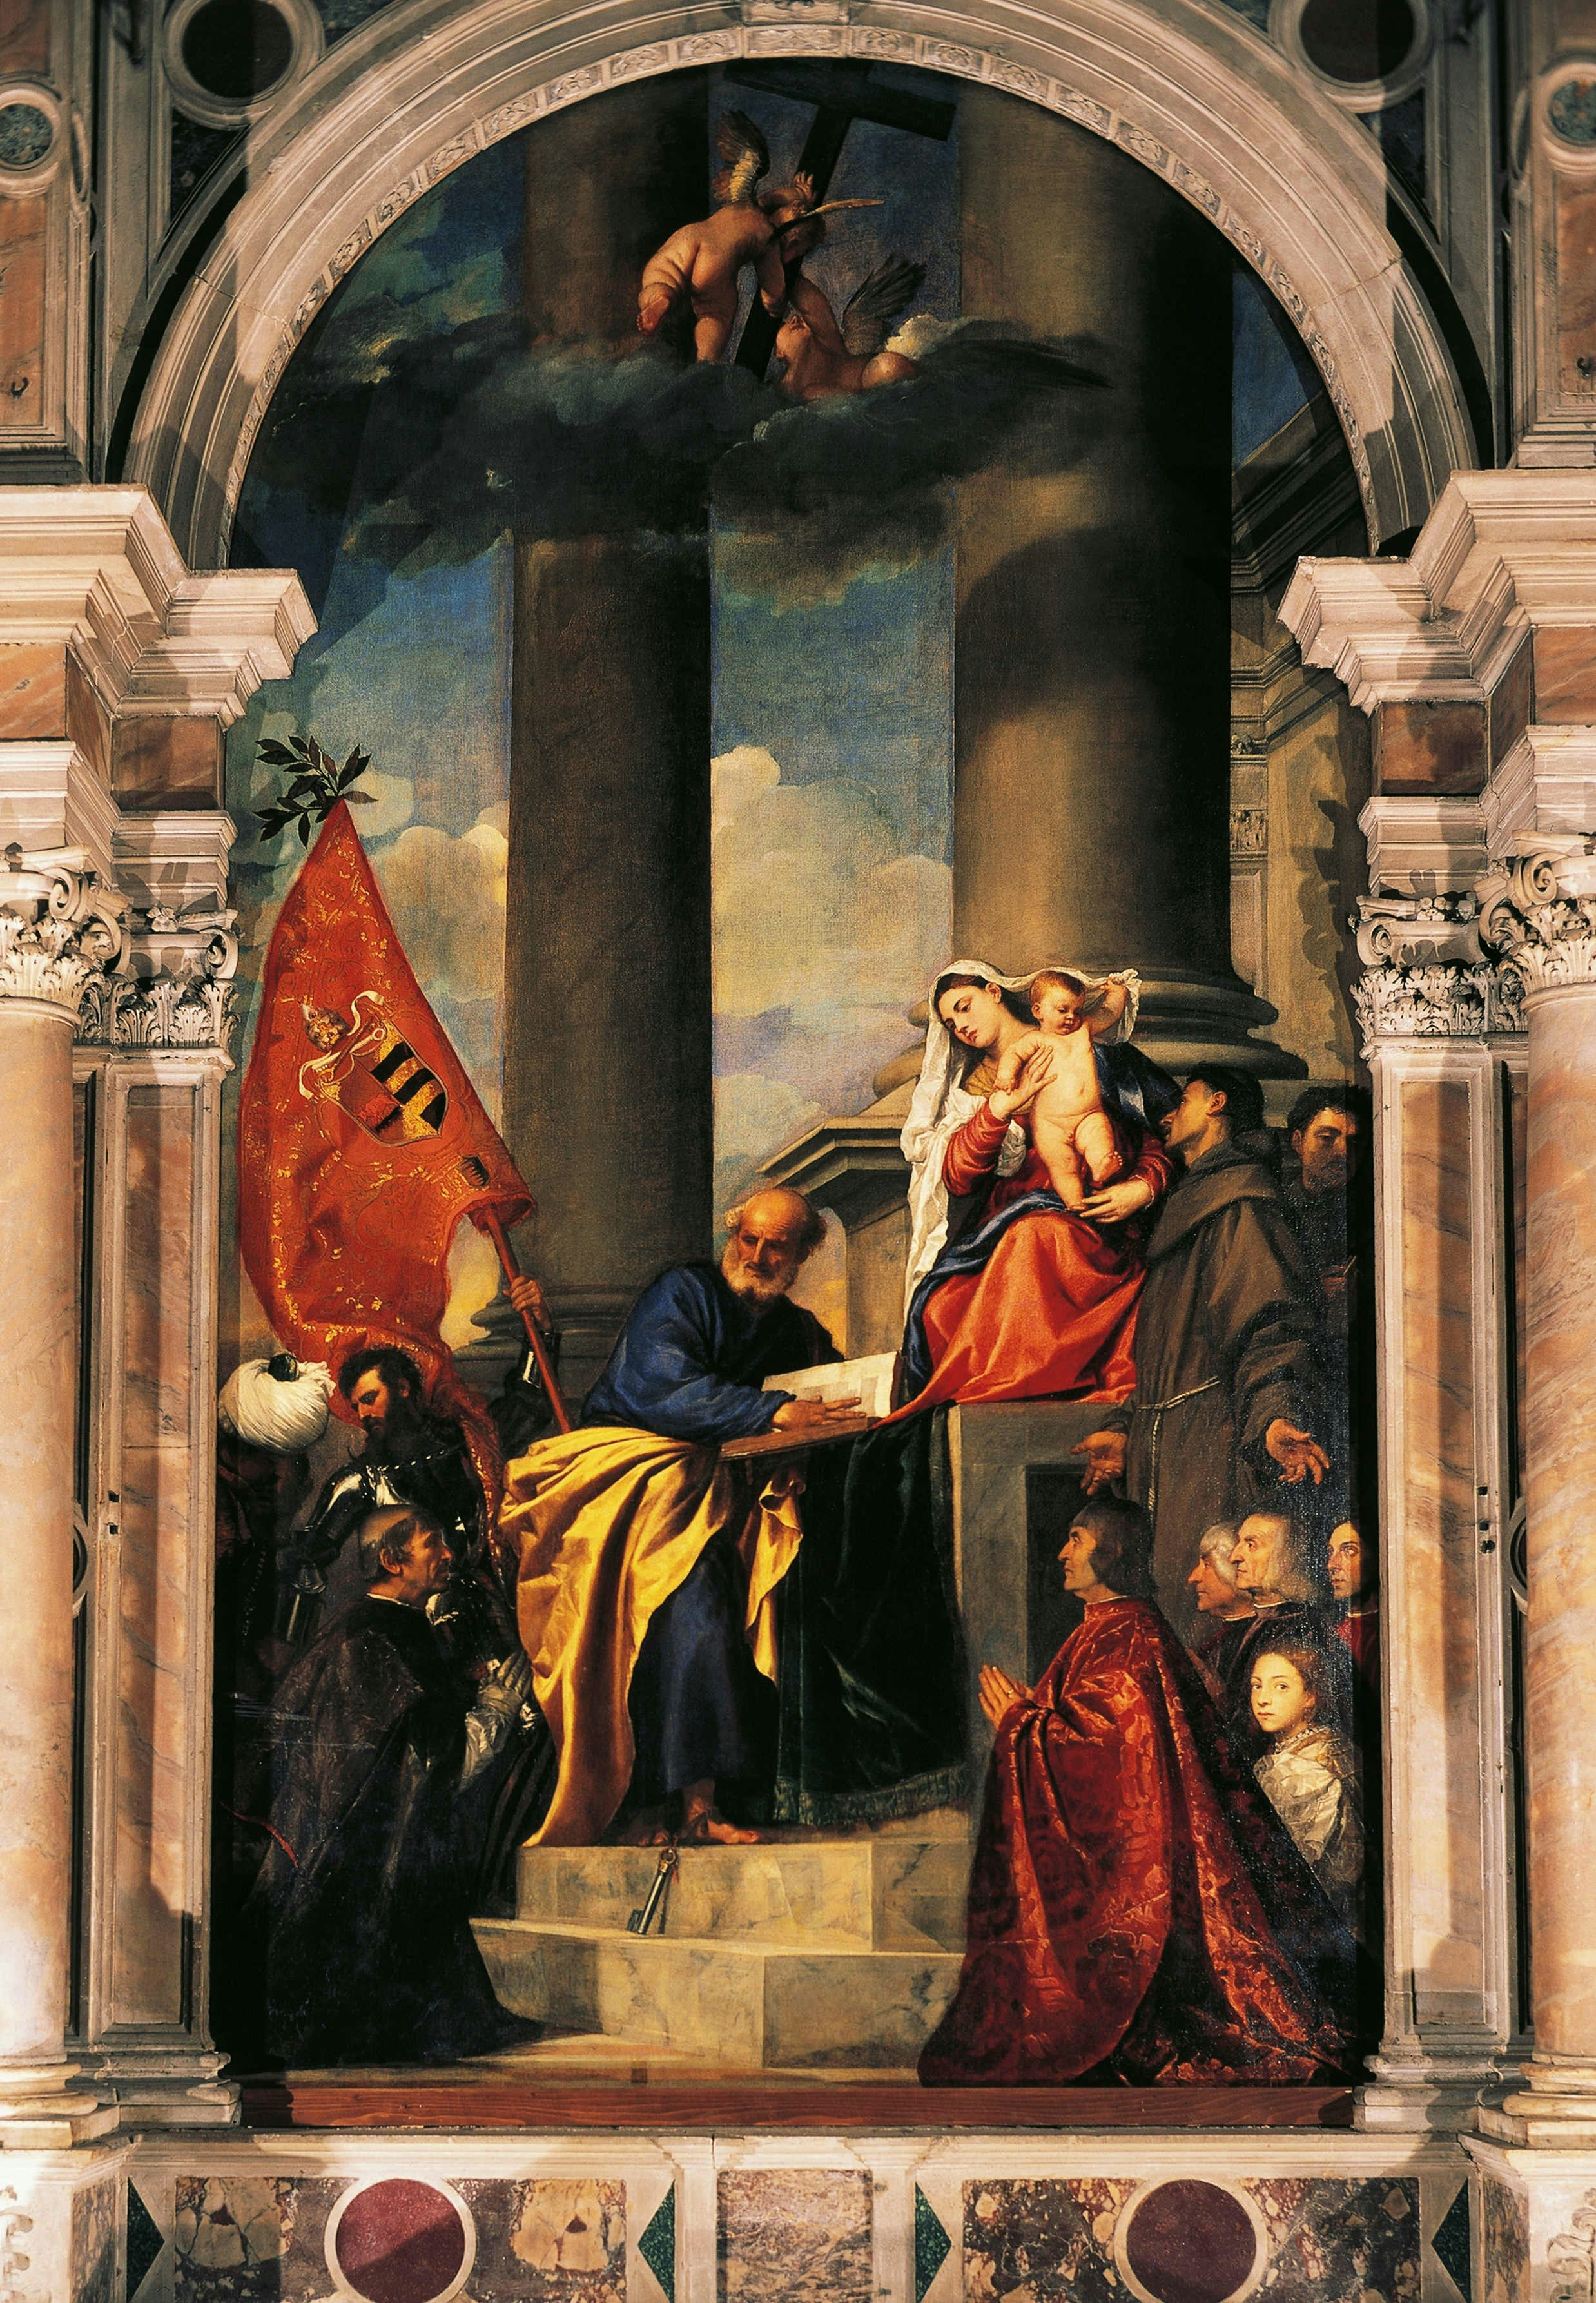 Titian's Madonna at Basilica Dei Frari has been restored